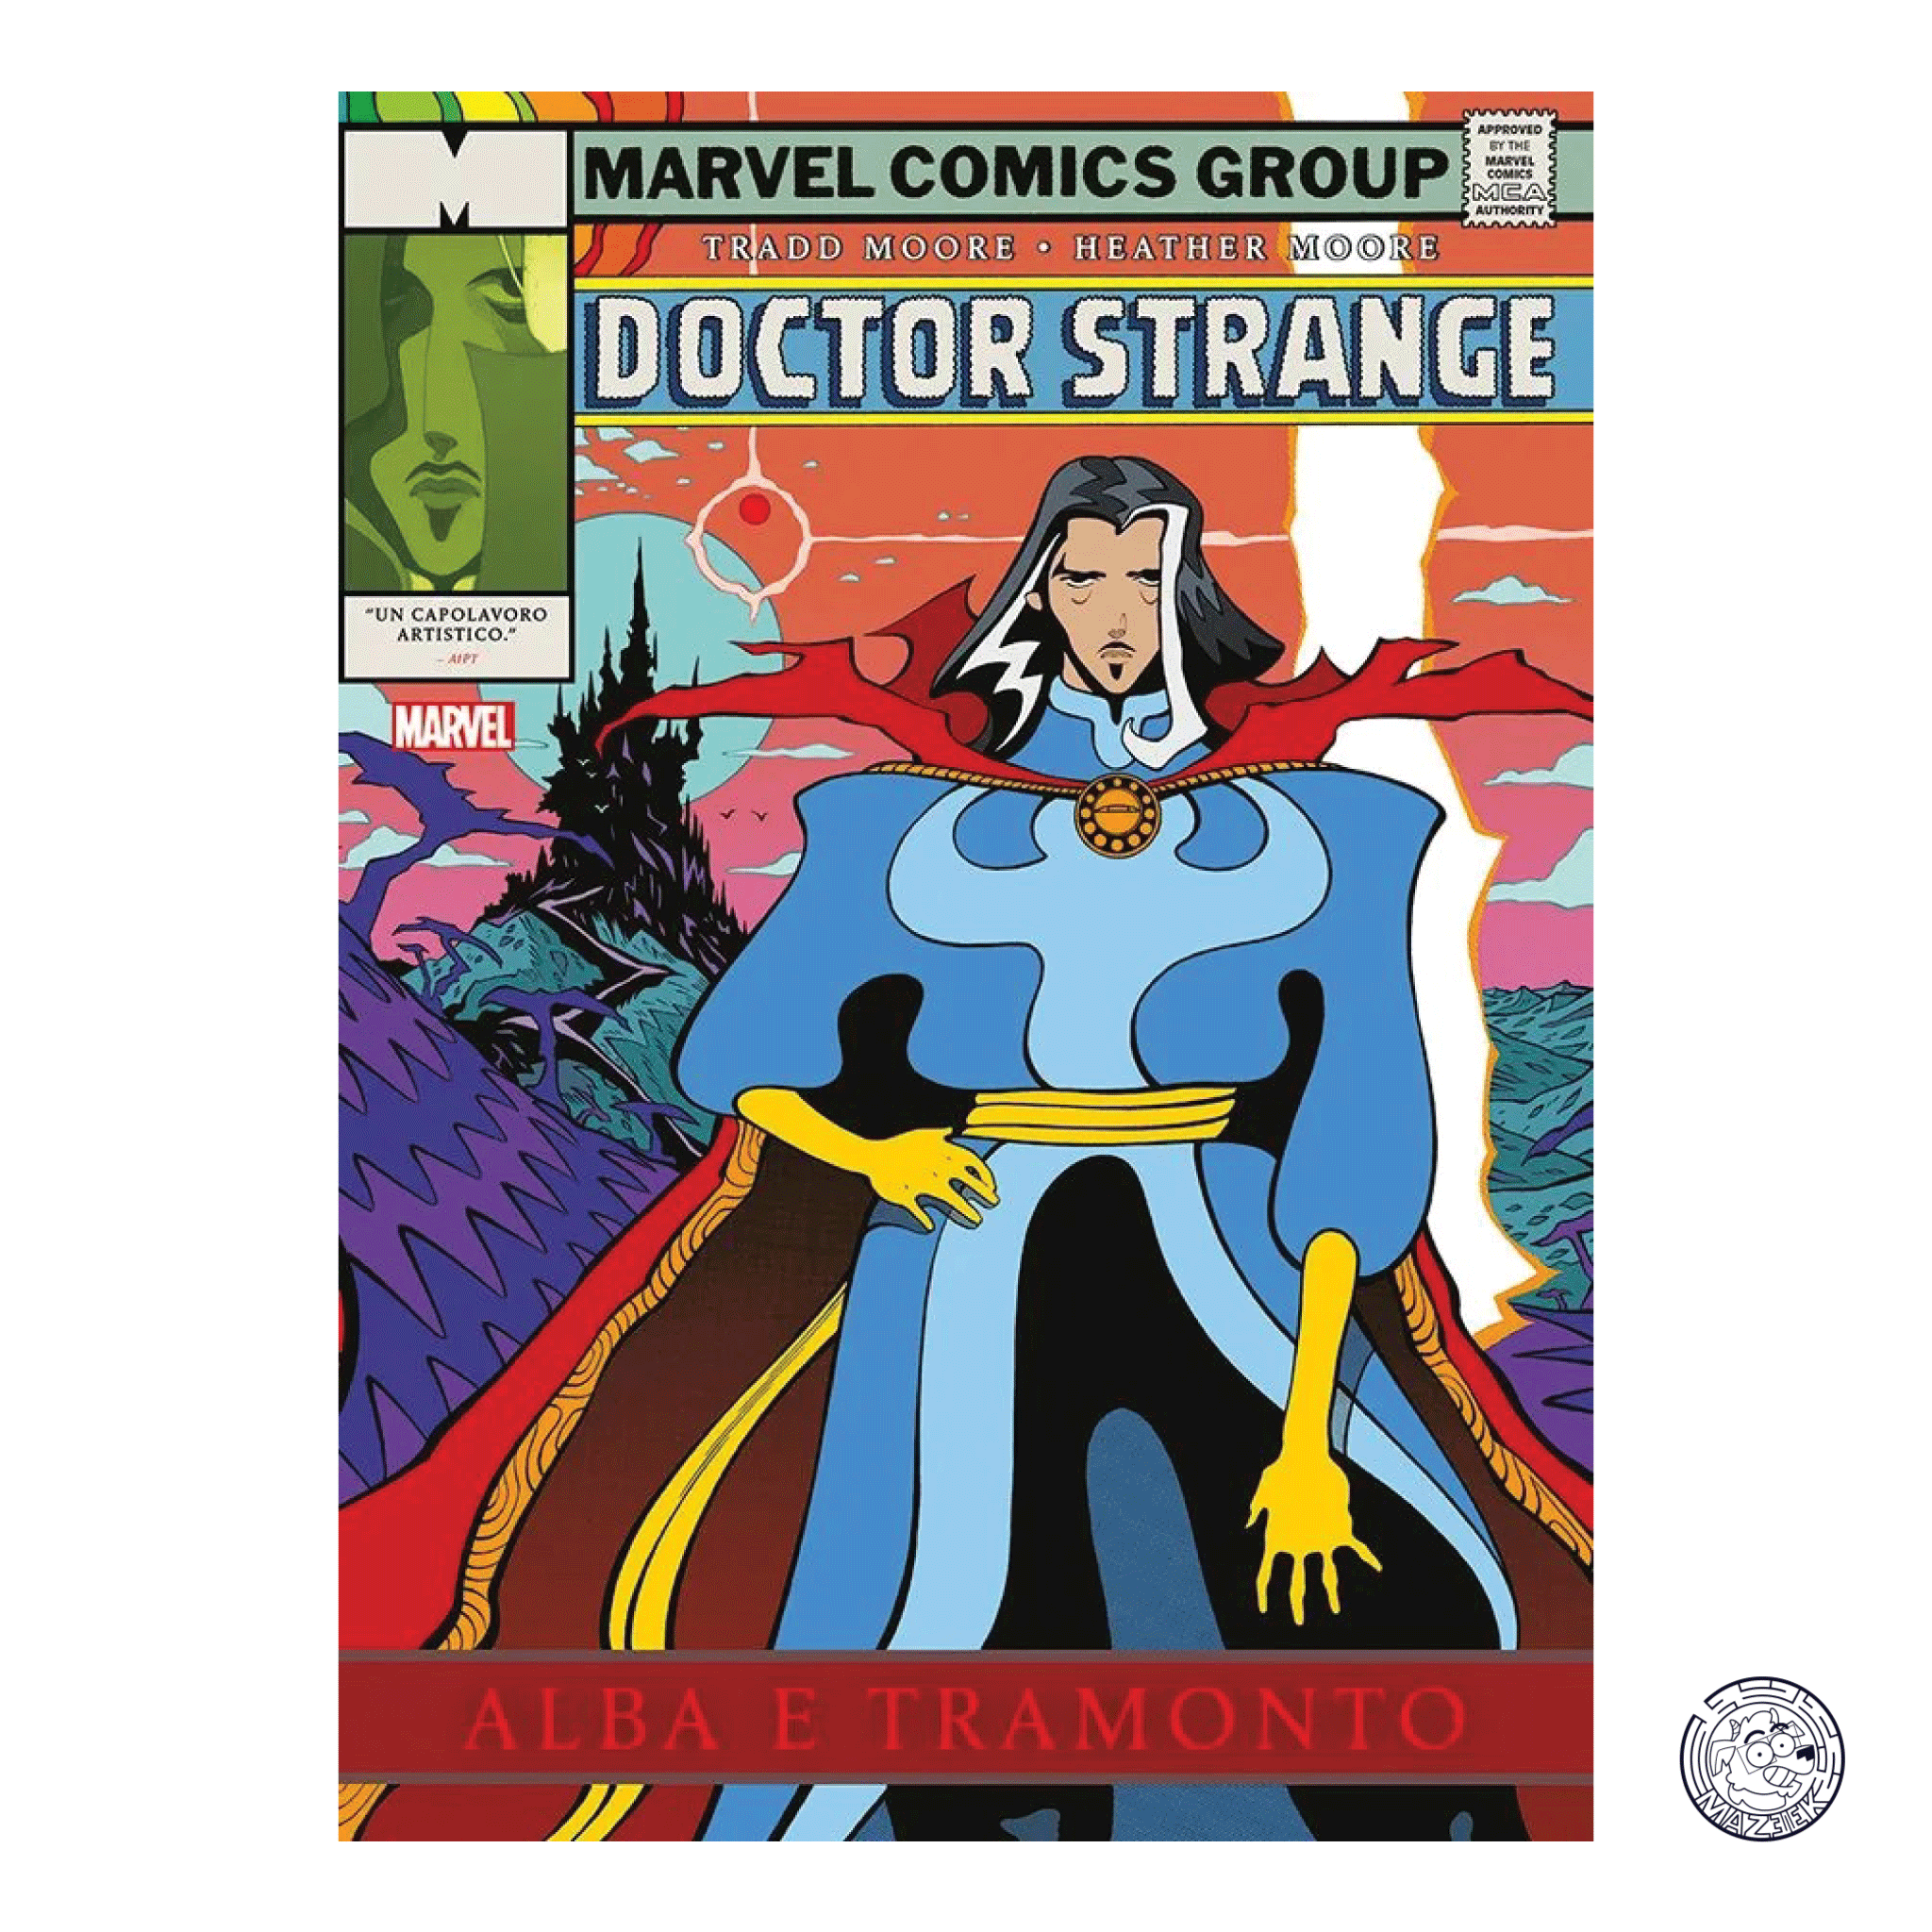 Doctor Strange – Dawn and Dusk